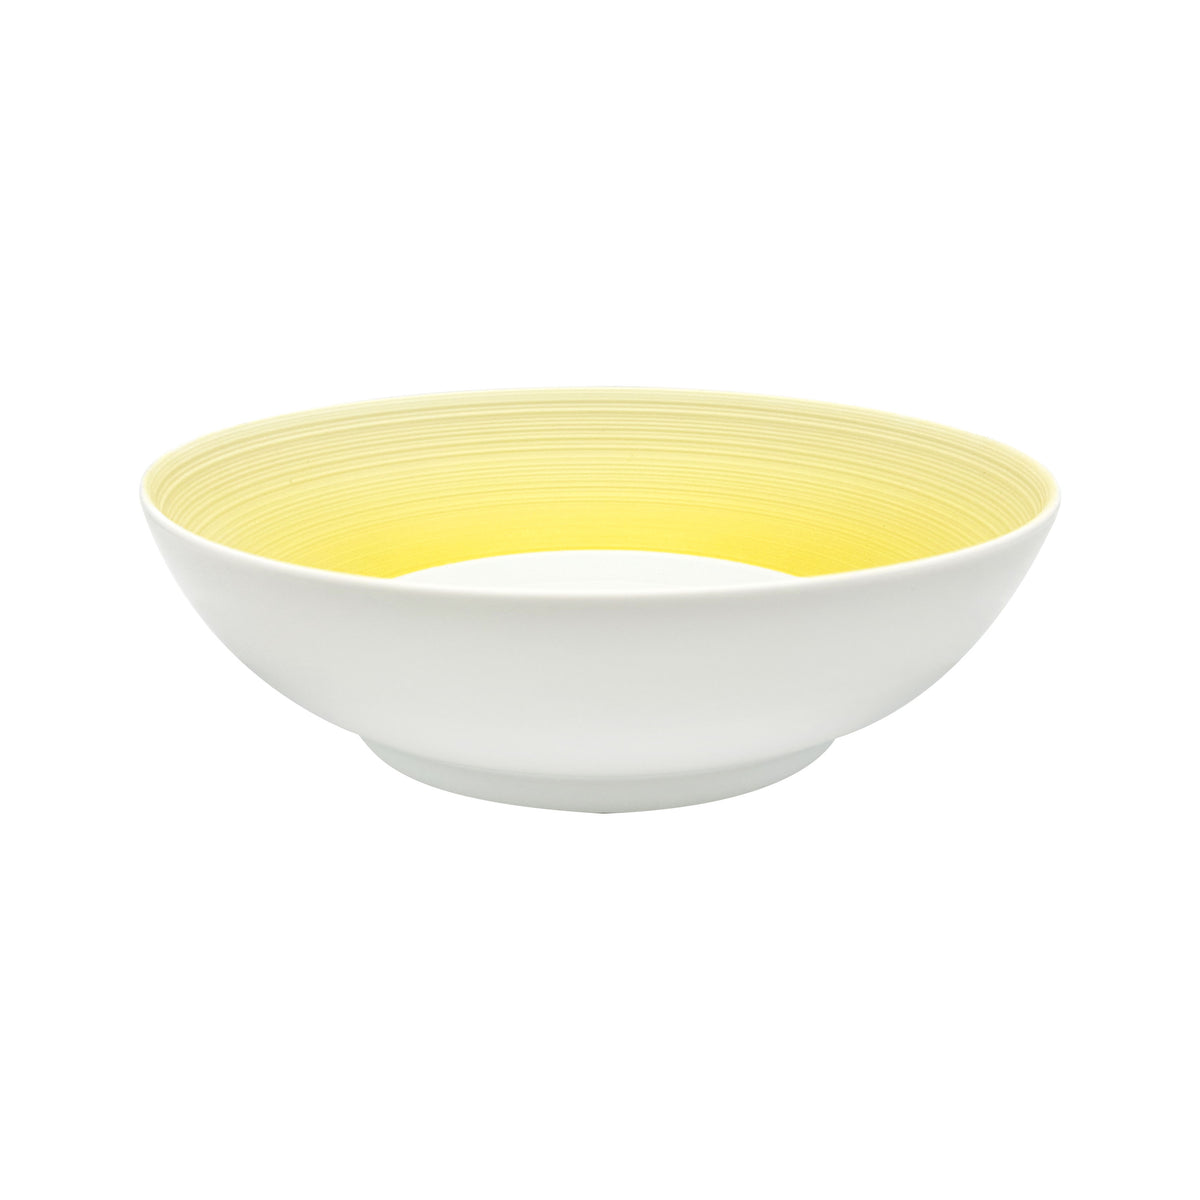 HEMISPHERE Mimosa Yellow - GM salad bowl